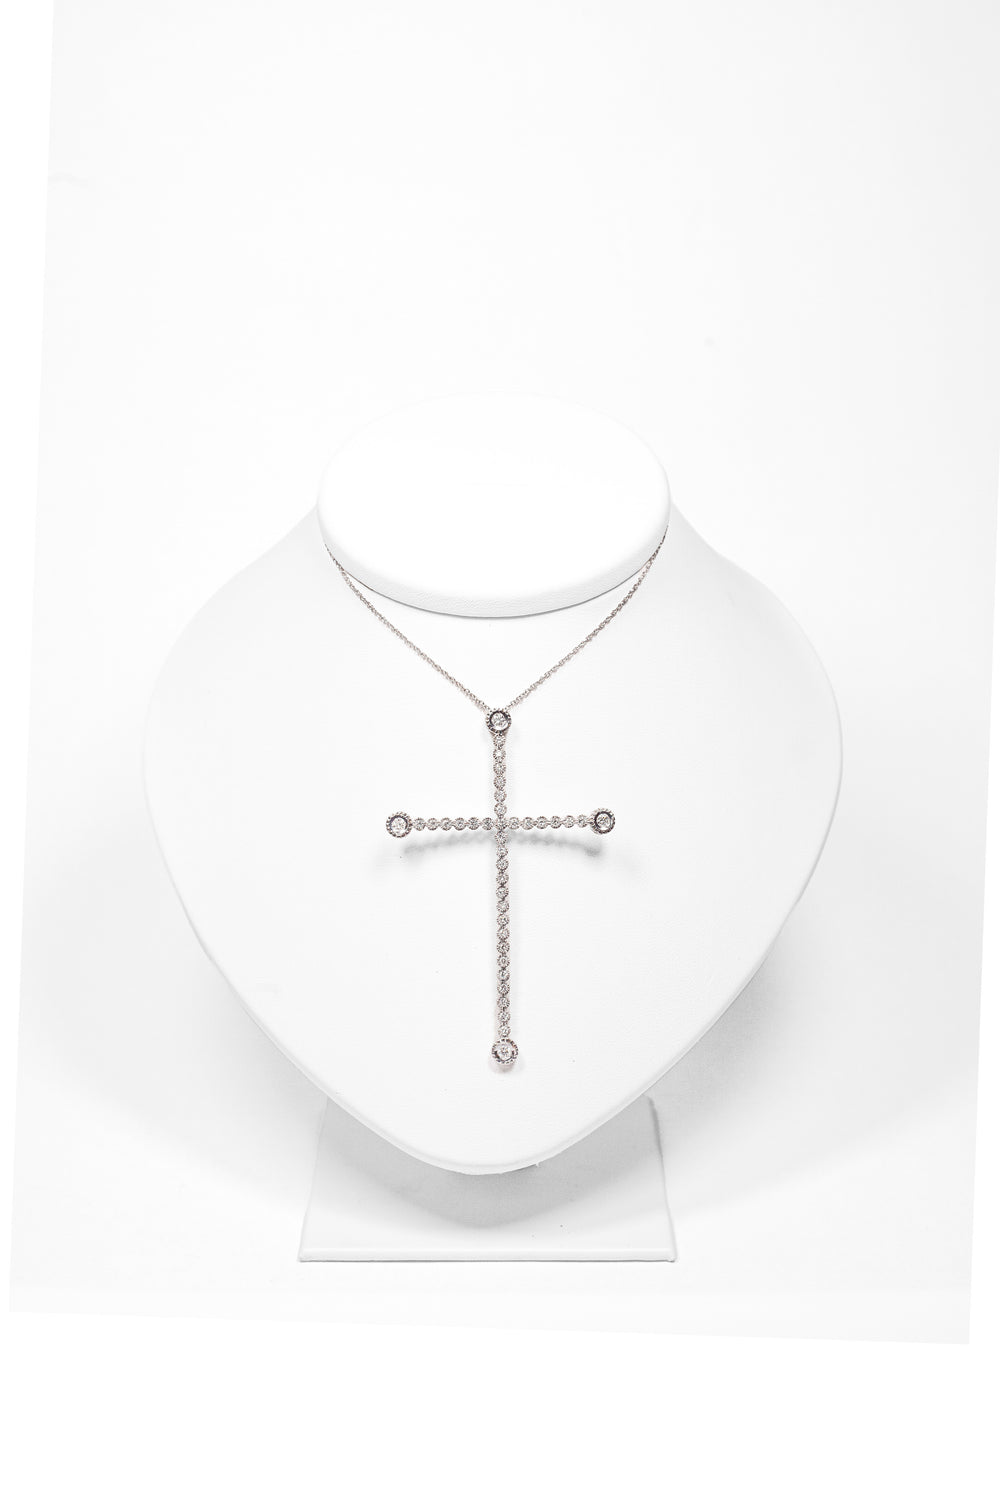 Large 18 Carat White Gold Diamond Cross Pendant and Chain